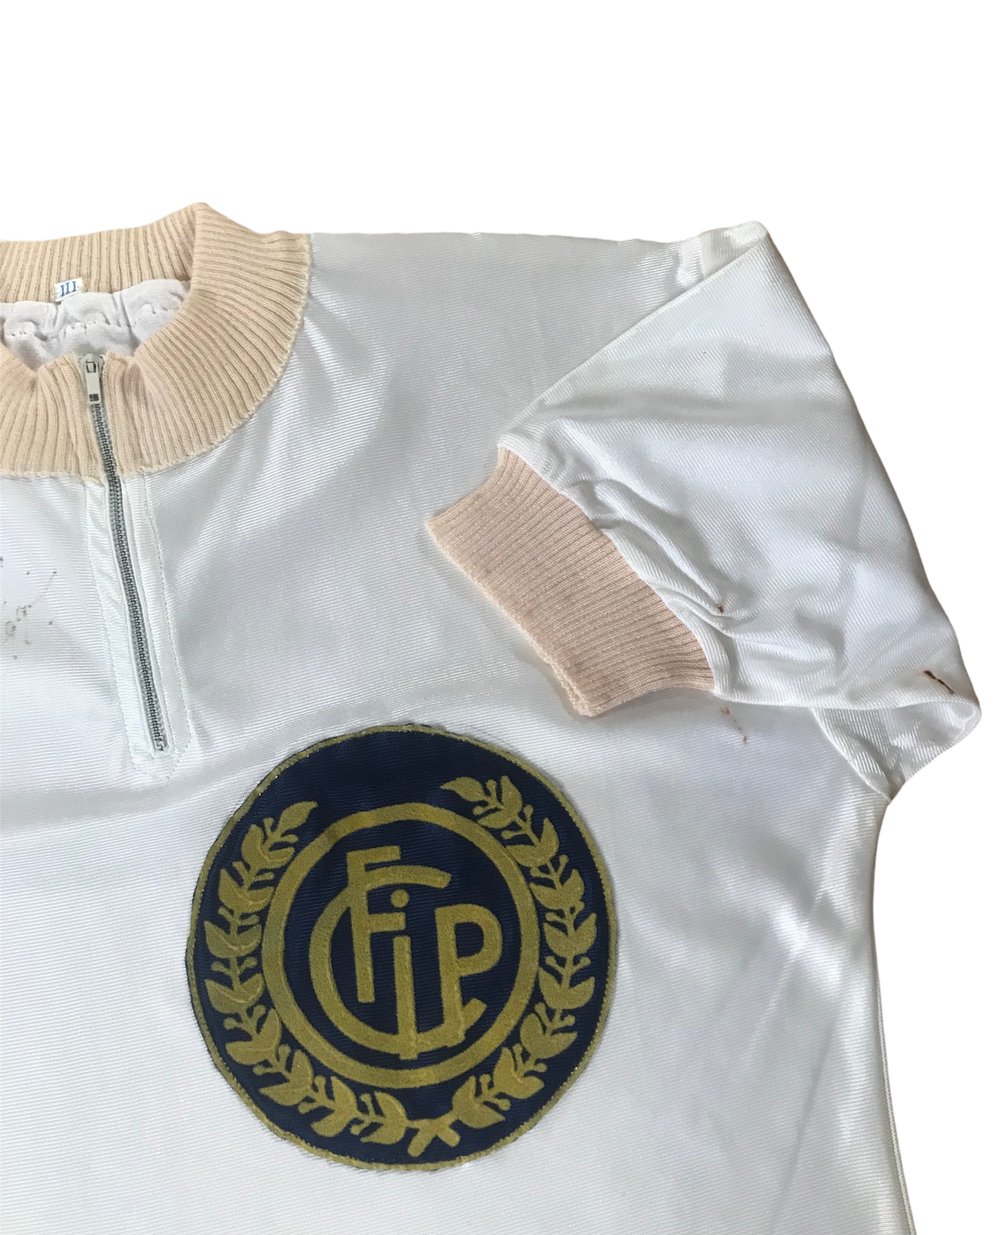 Gary Wiggins ðŸ‡¦ðŸ‡º 1984 European Madison Championships ceremonial jersey  